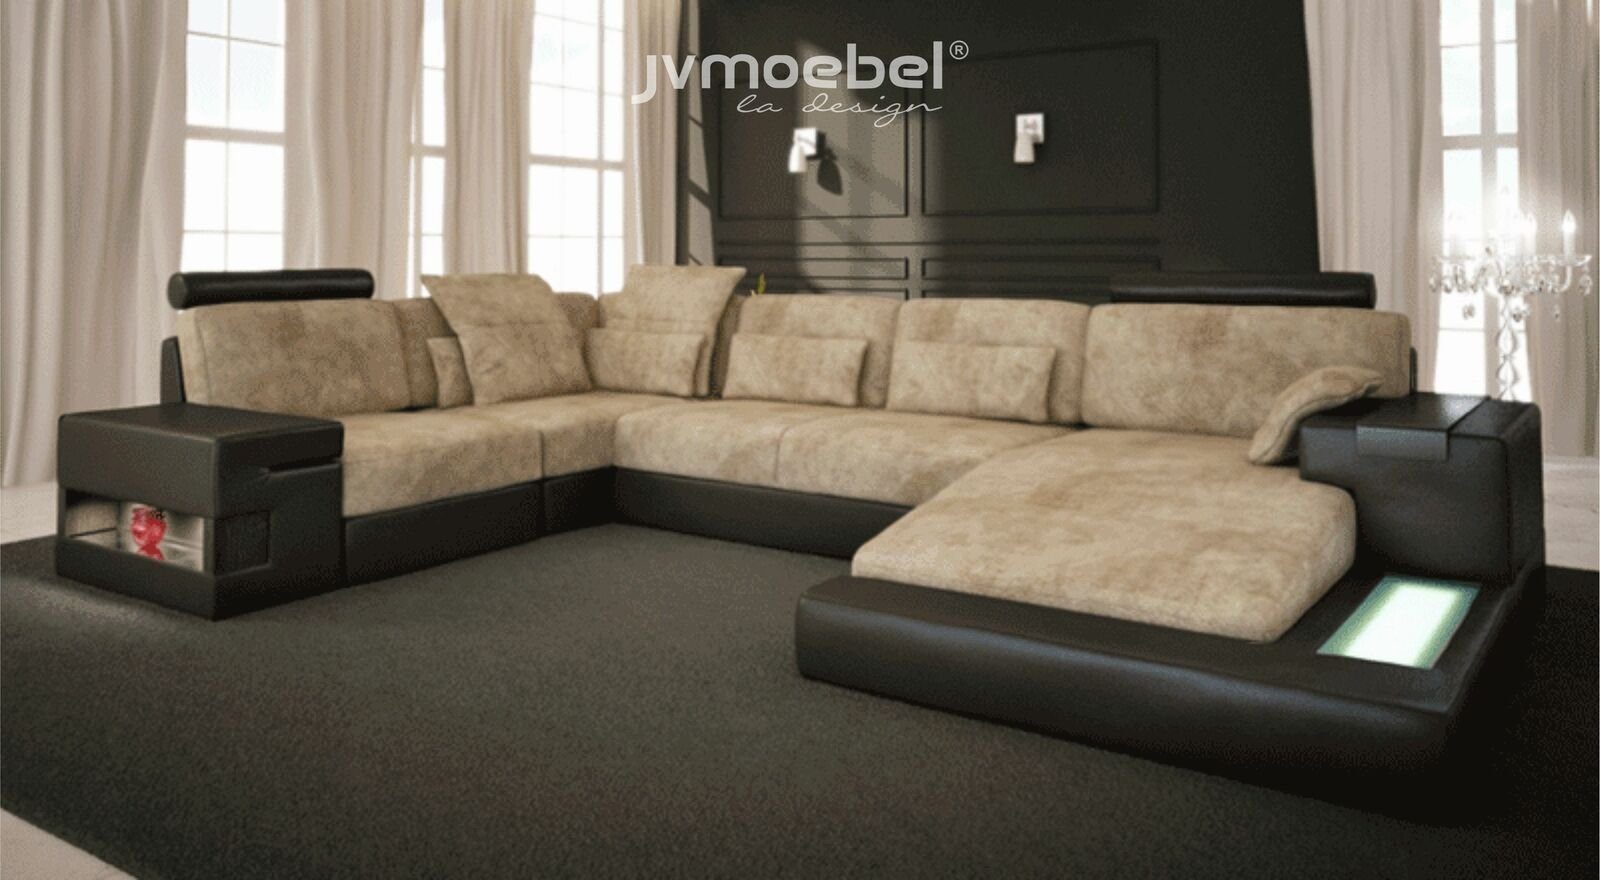 JVmoebel Ecksofa Ecksofa Big Wohnlandschaft Couch Sofa Polster Sitz Leder U Form, Made in Europe